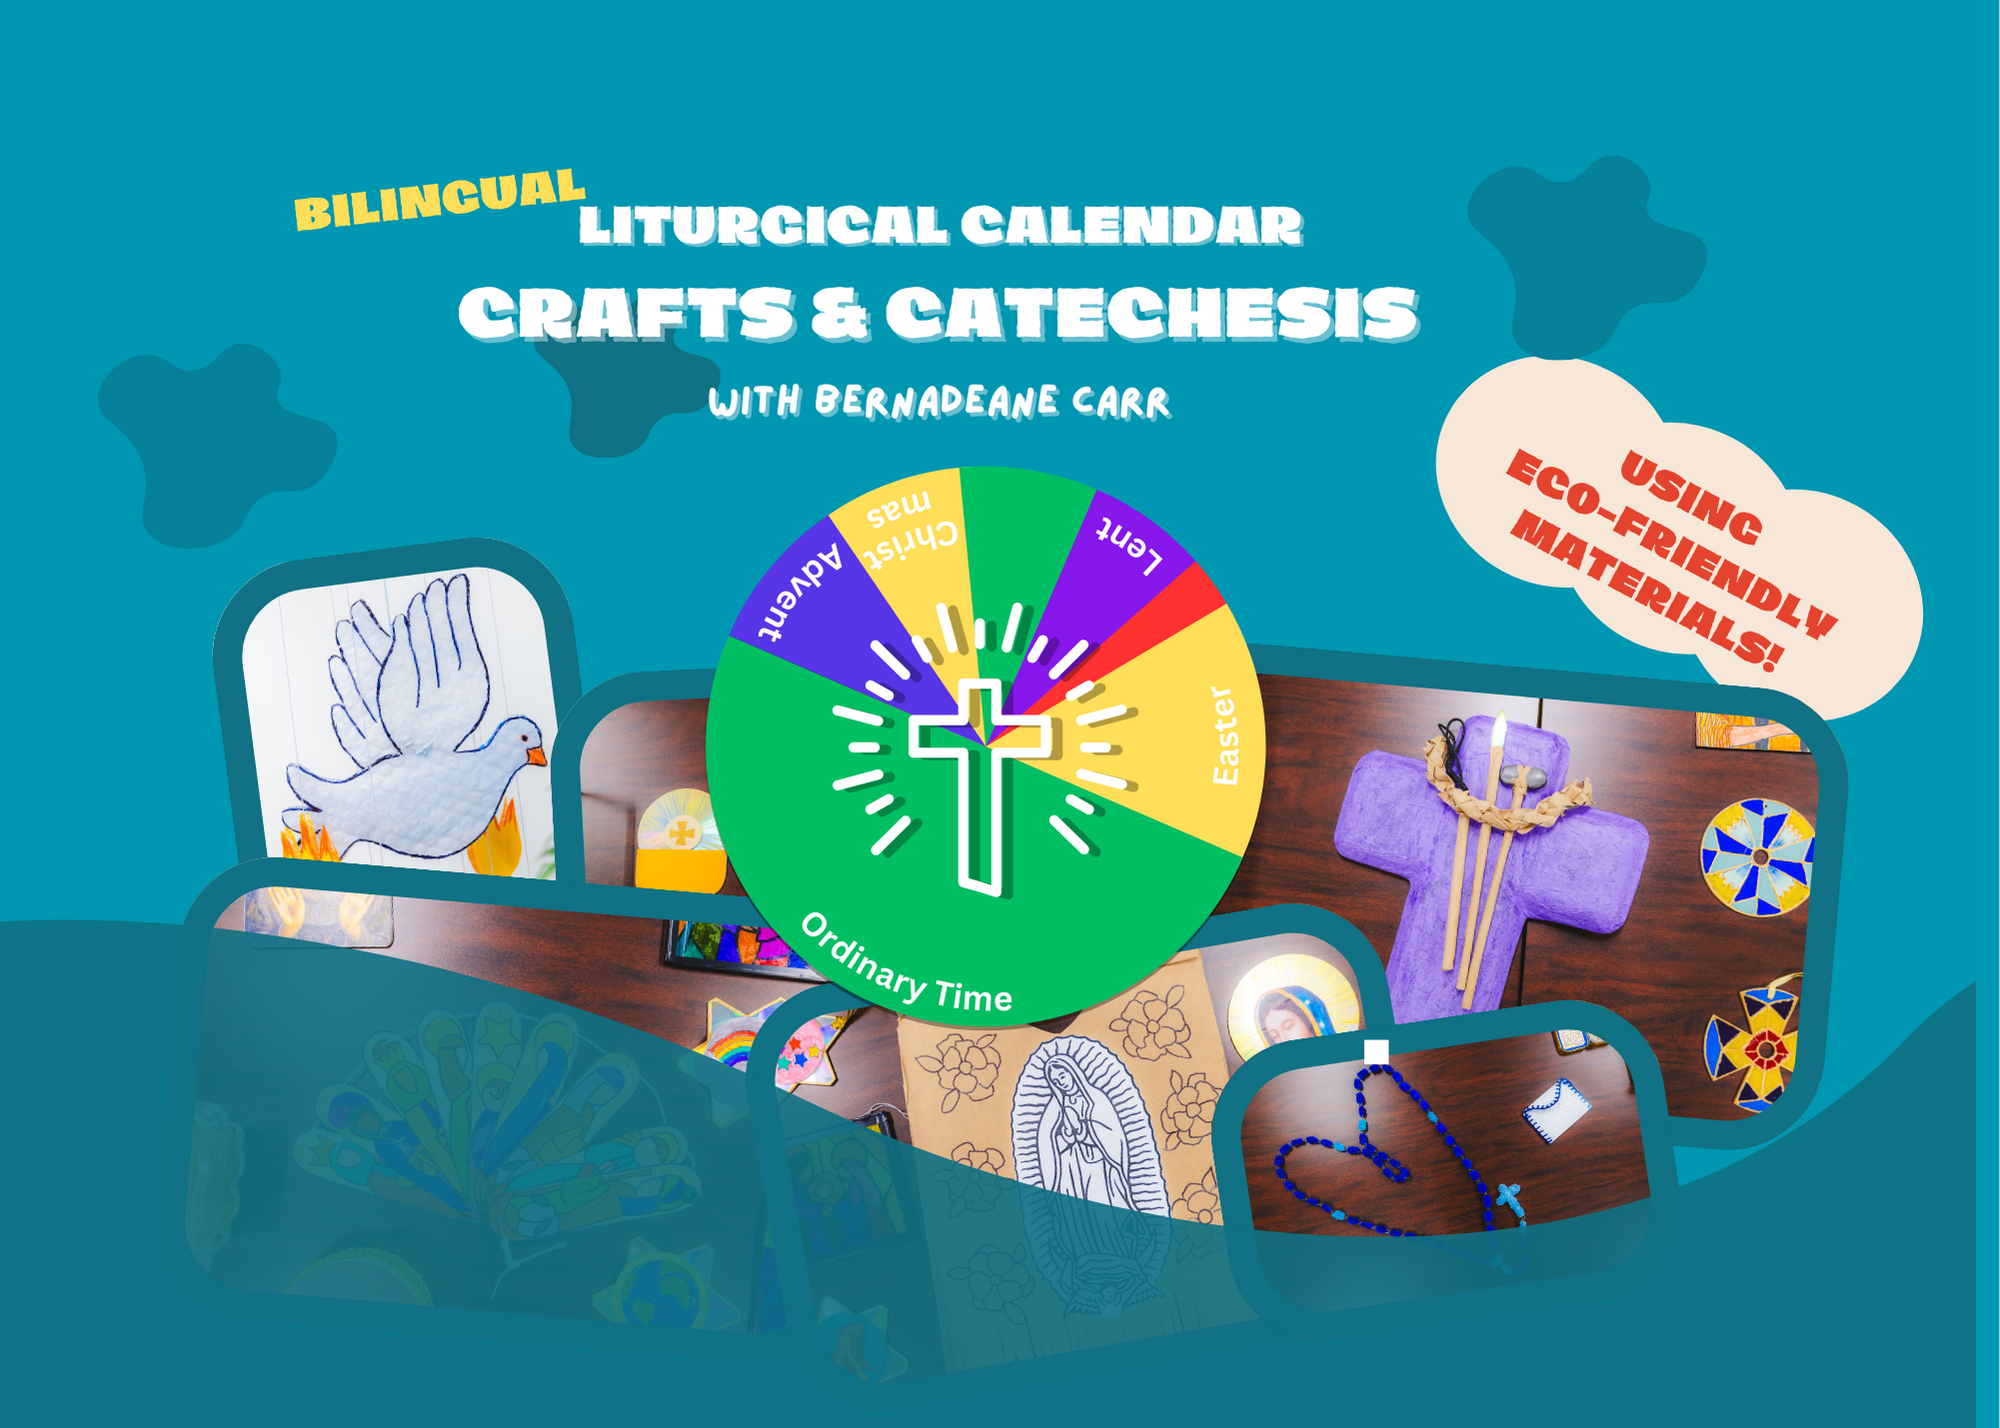 Liturgical Calendar- Crafts & Catechesis